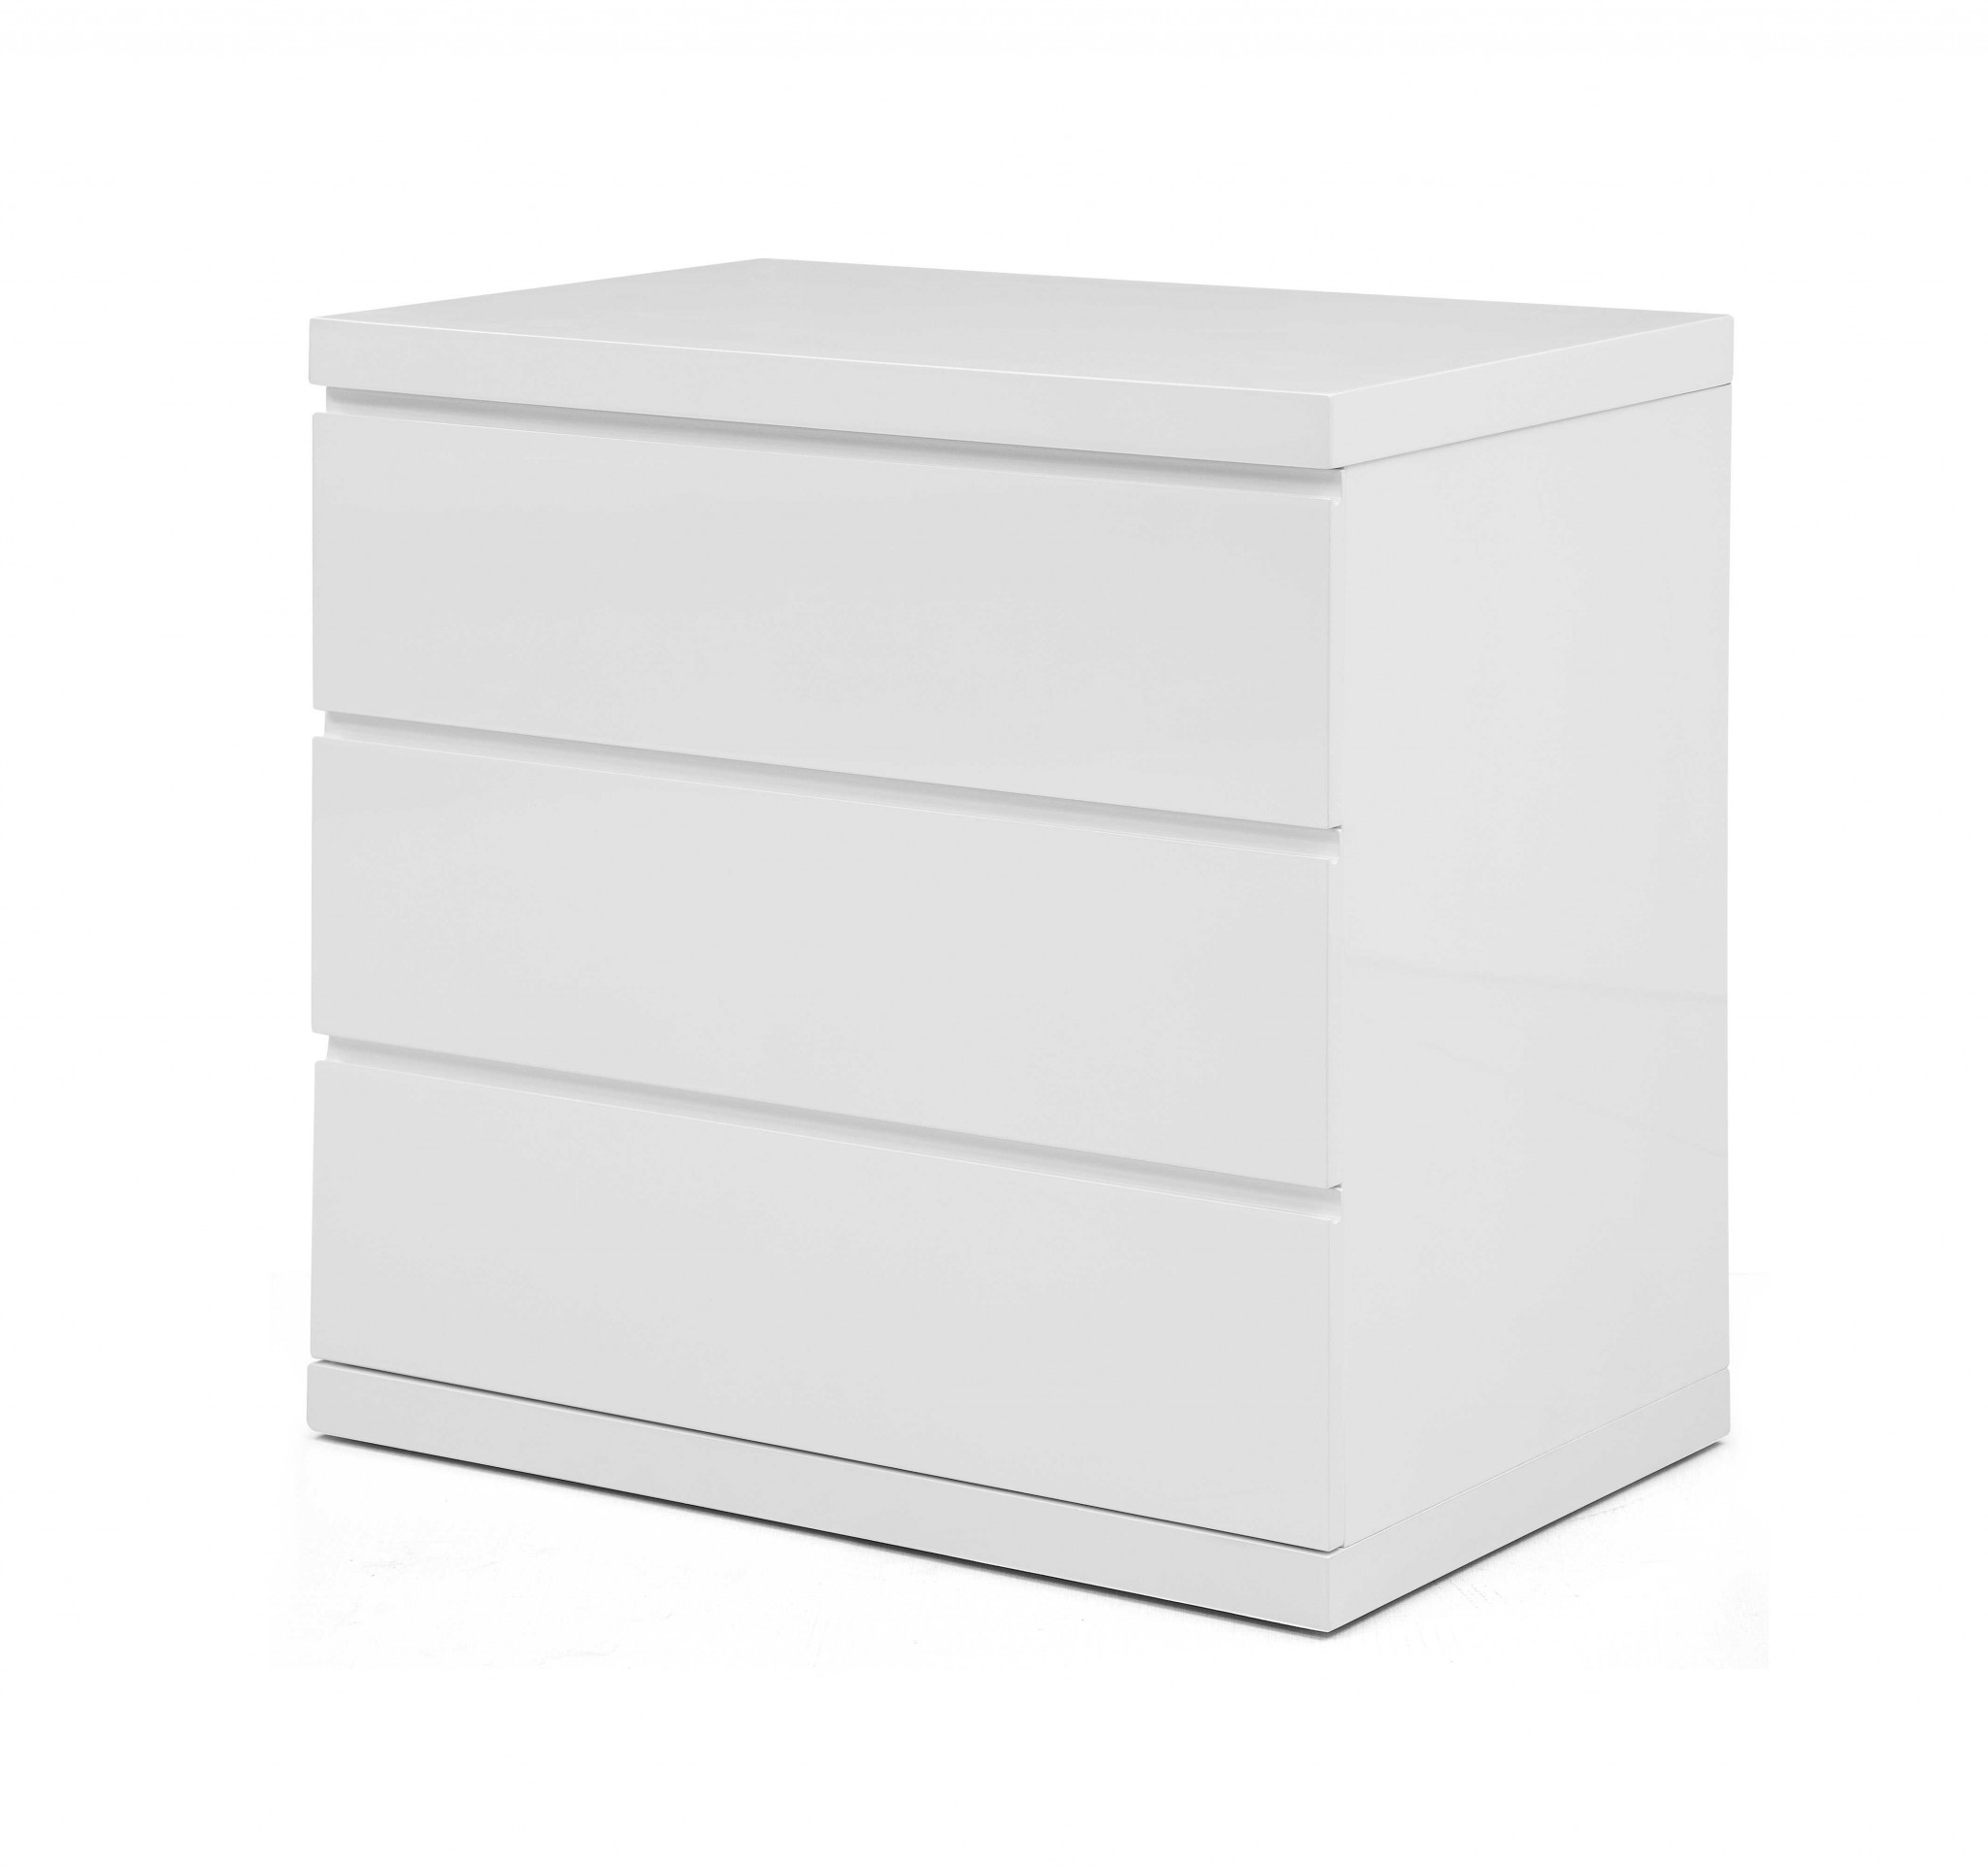 31" X 20" X 30" White Double Dresser Extension